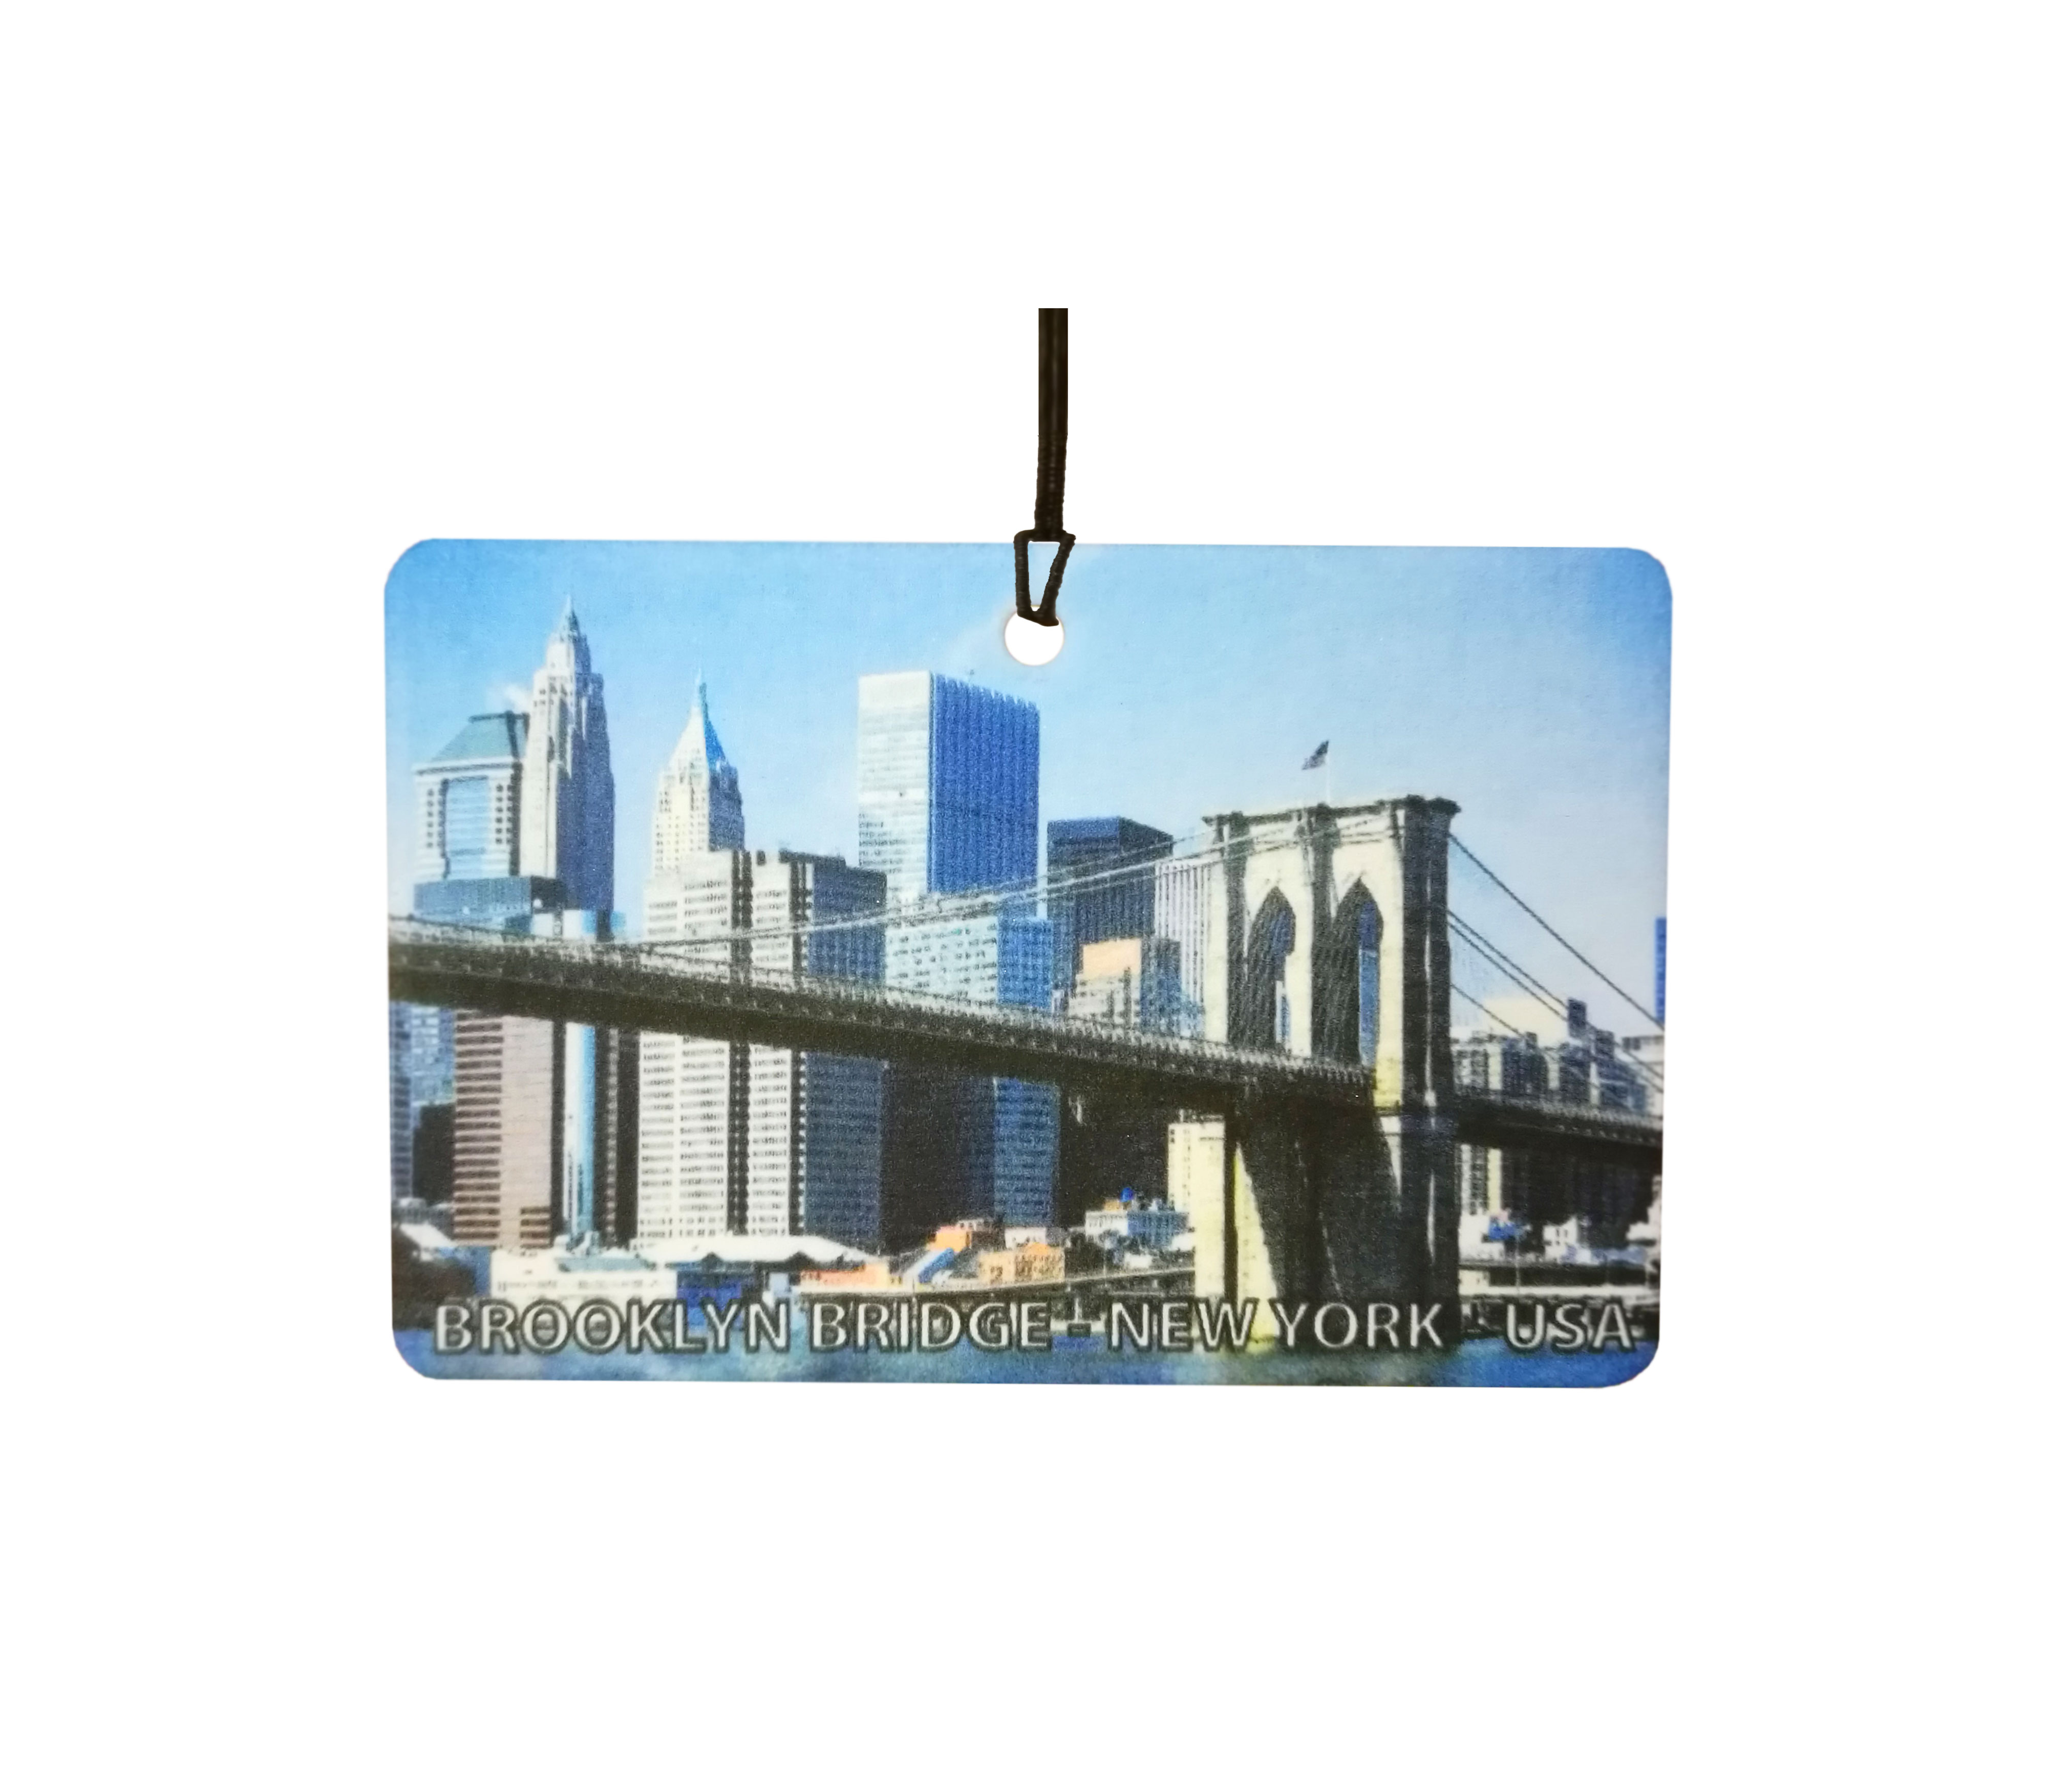 Brooklyn Bridge - New York - USA